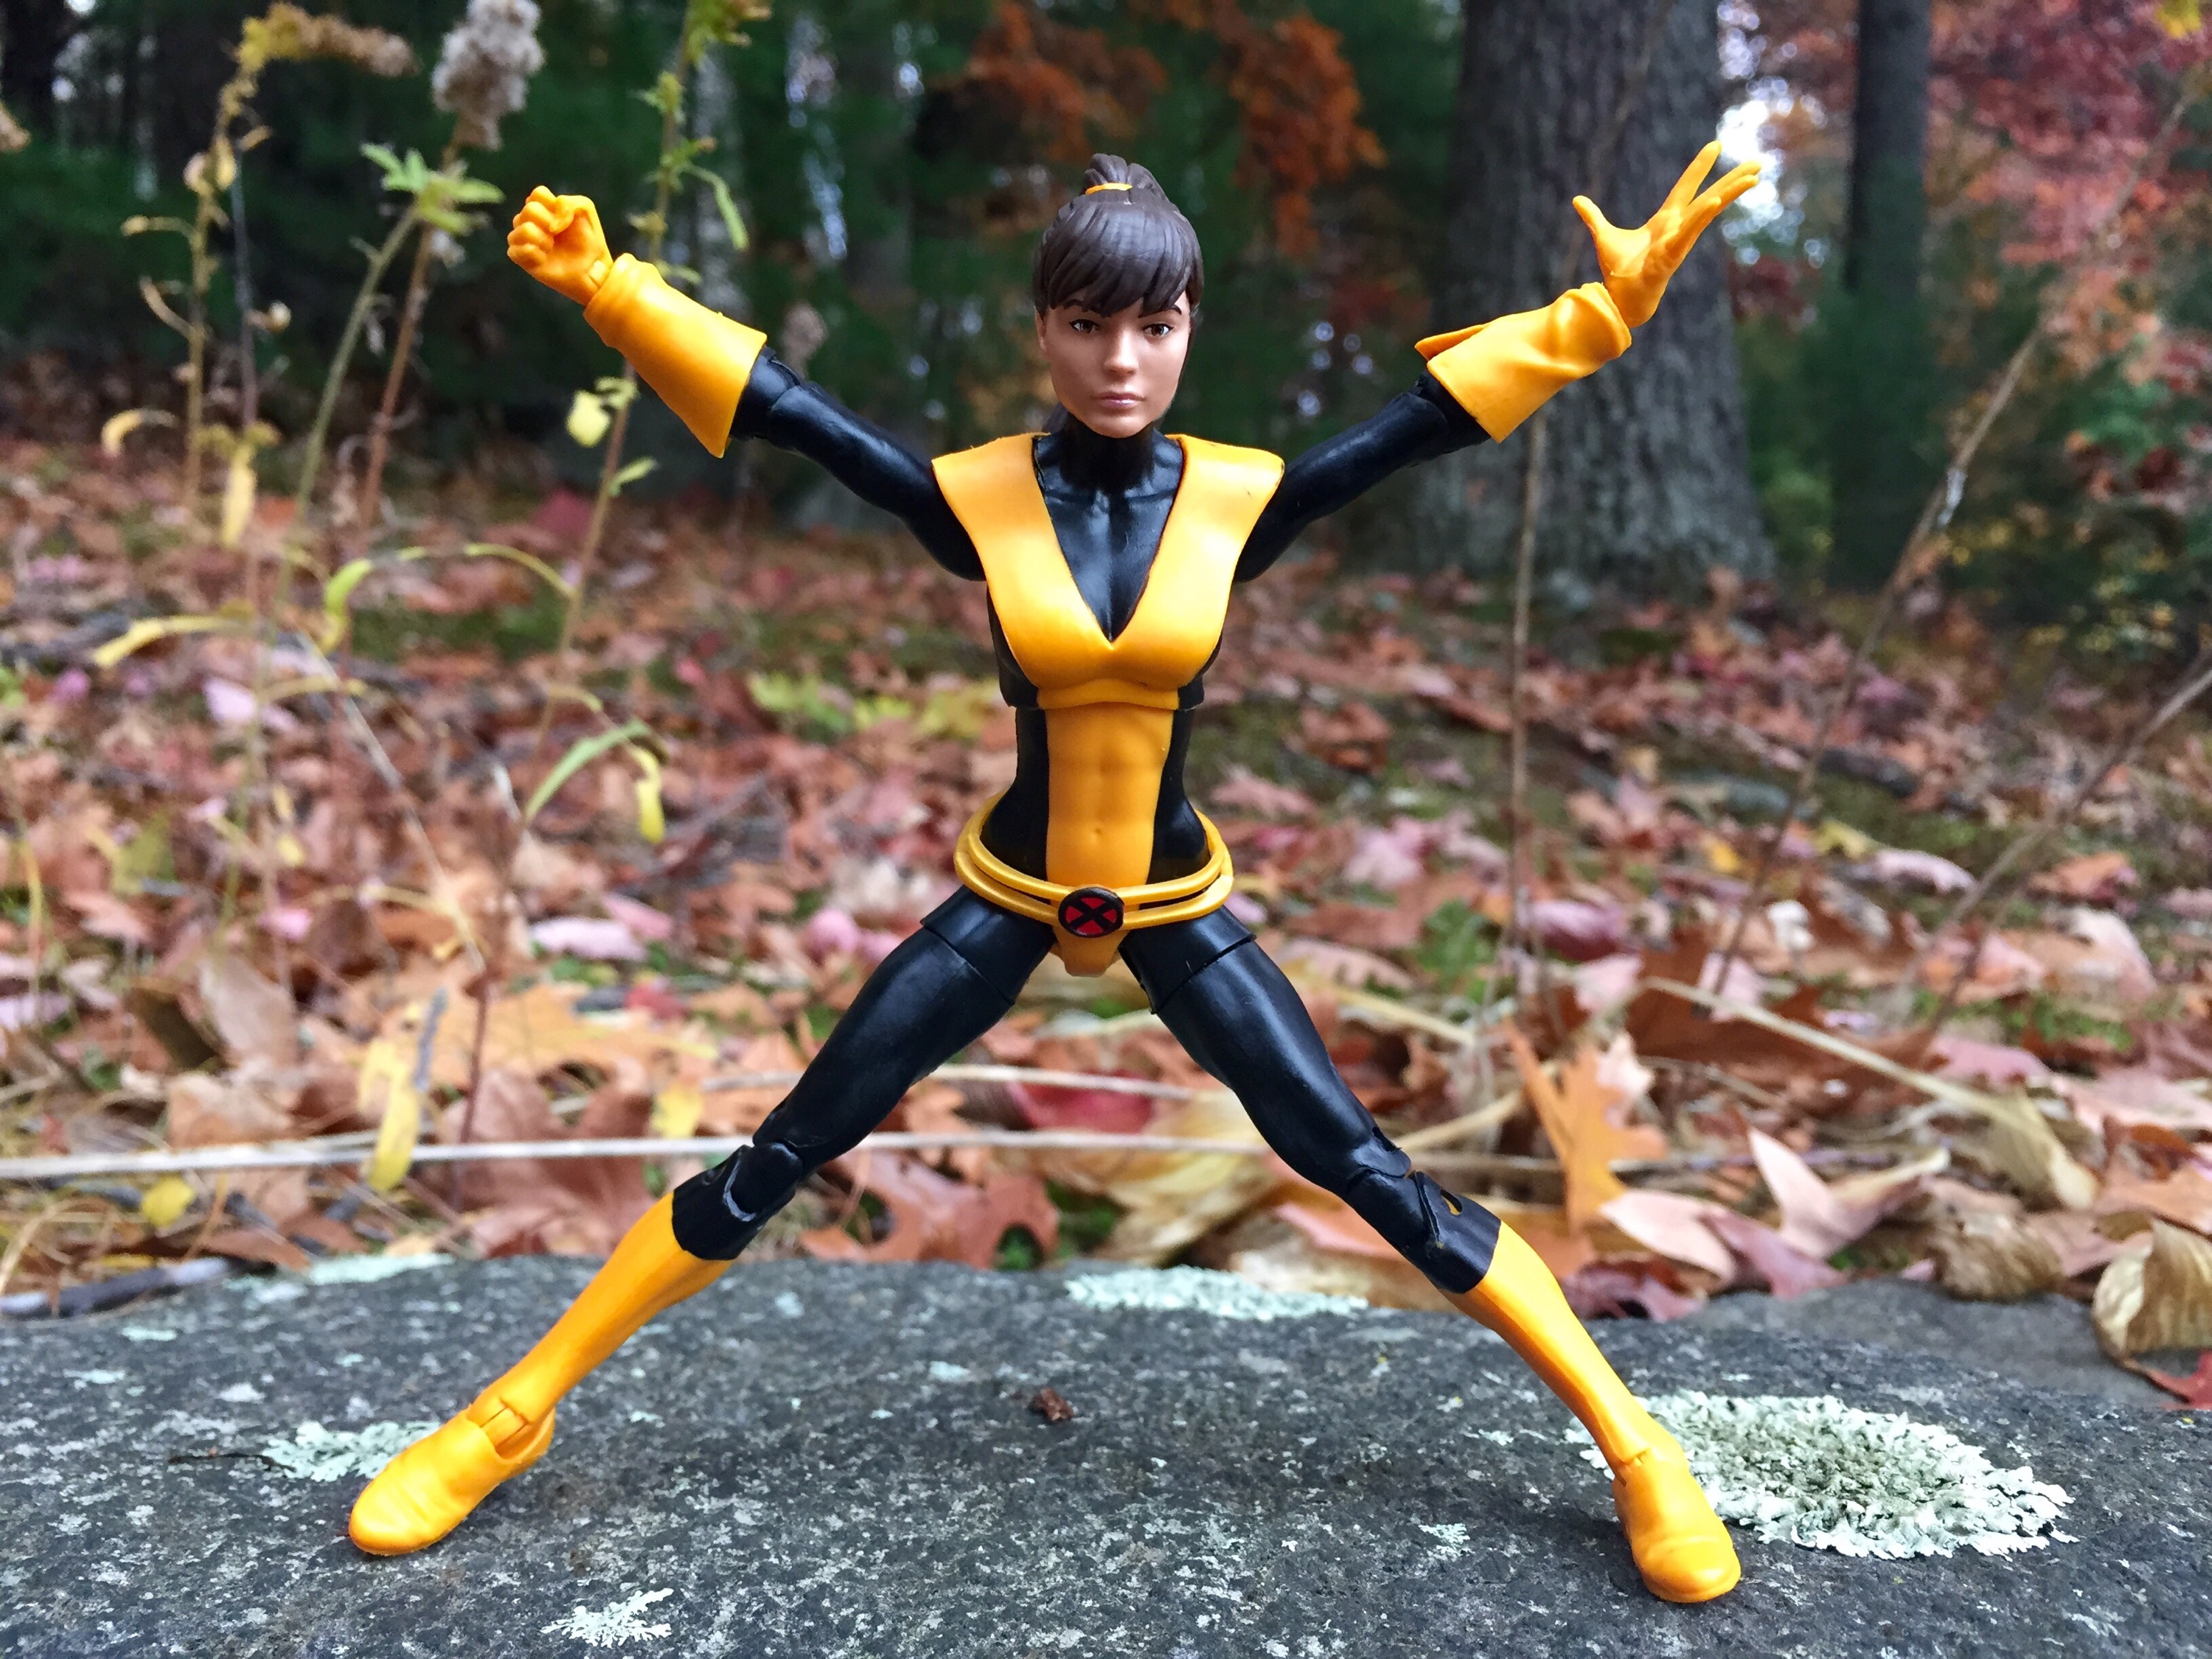 Marvel Legends XMen Kitty Pryde 6" Figure Review & Photos